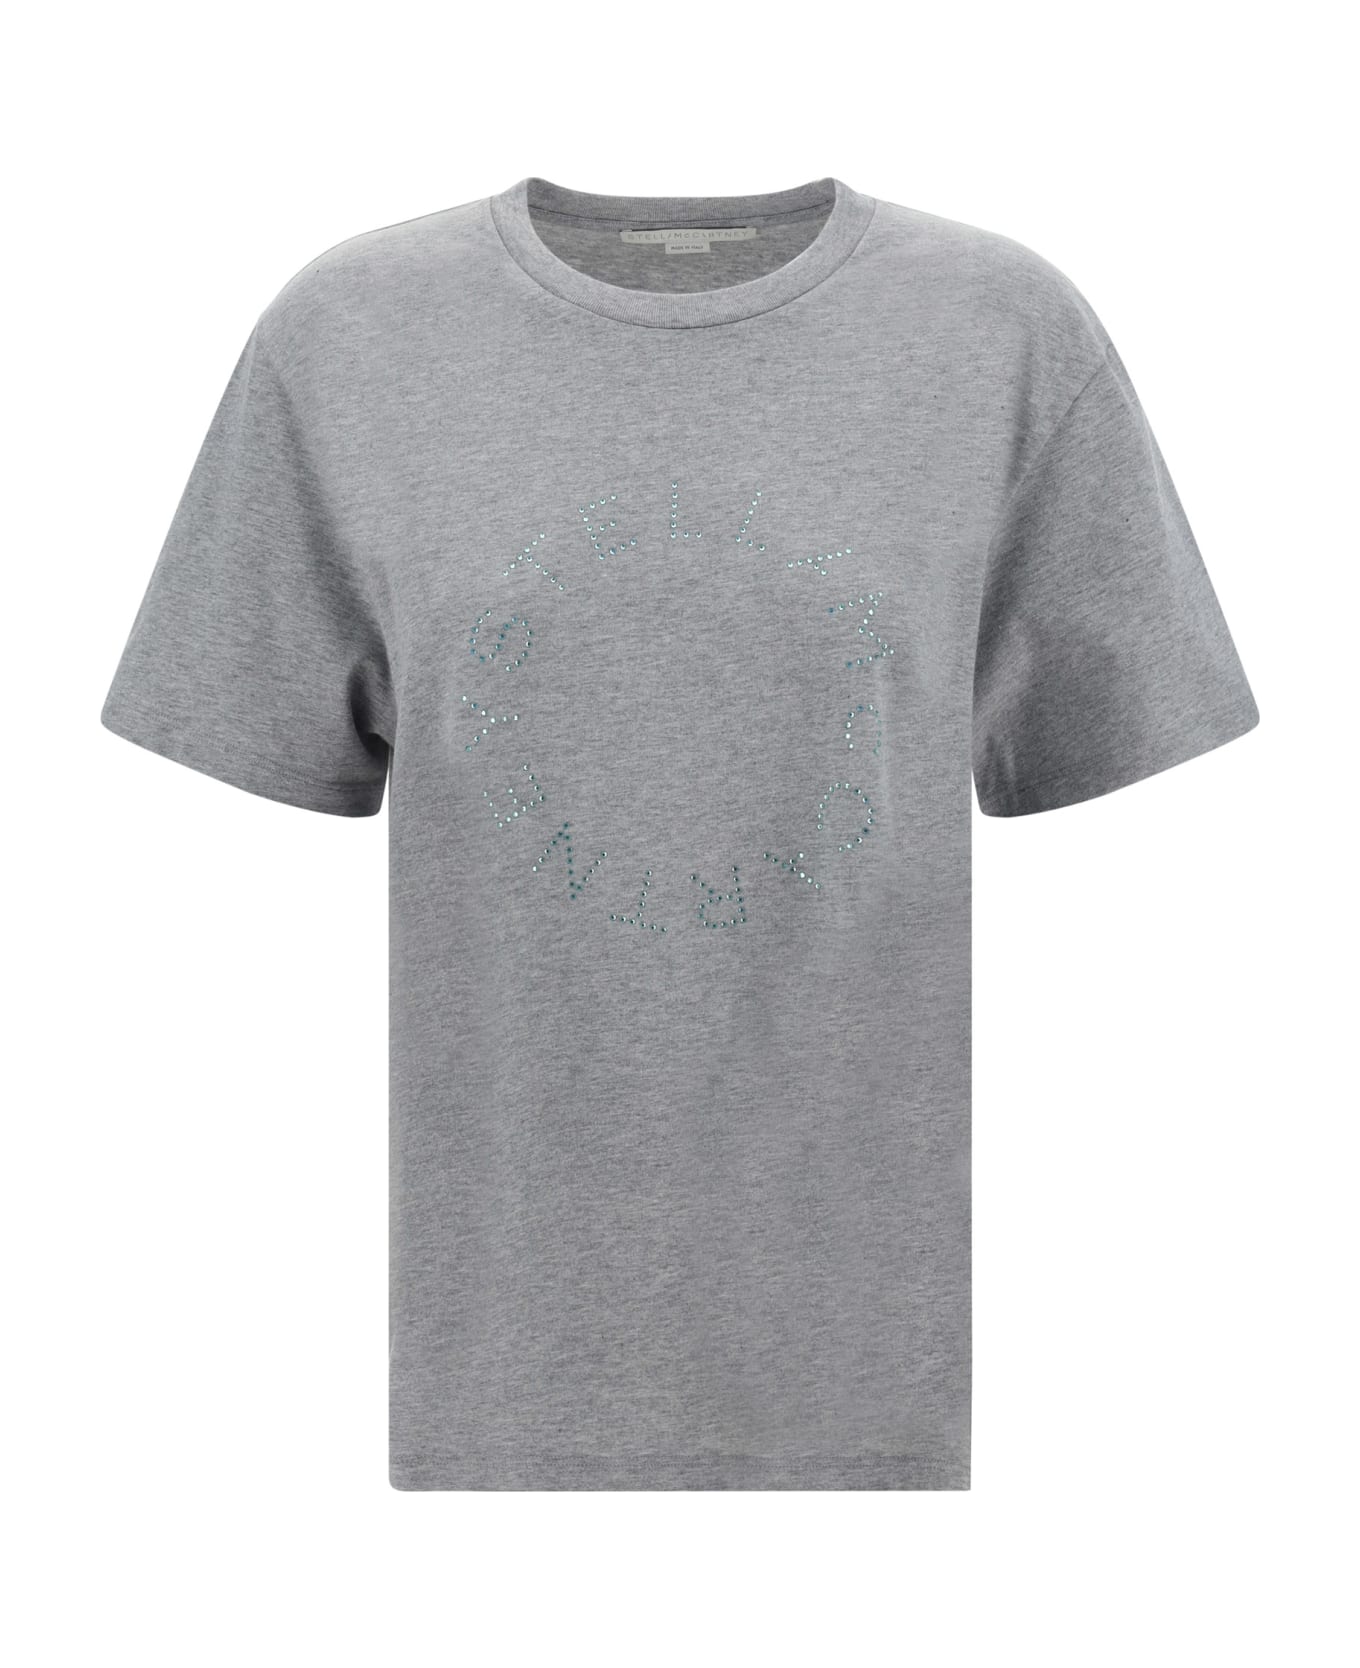 Stella McCartney Rhinestone T-shirt - Grey Melange